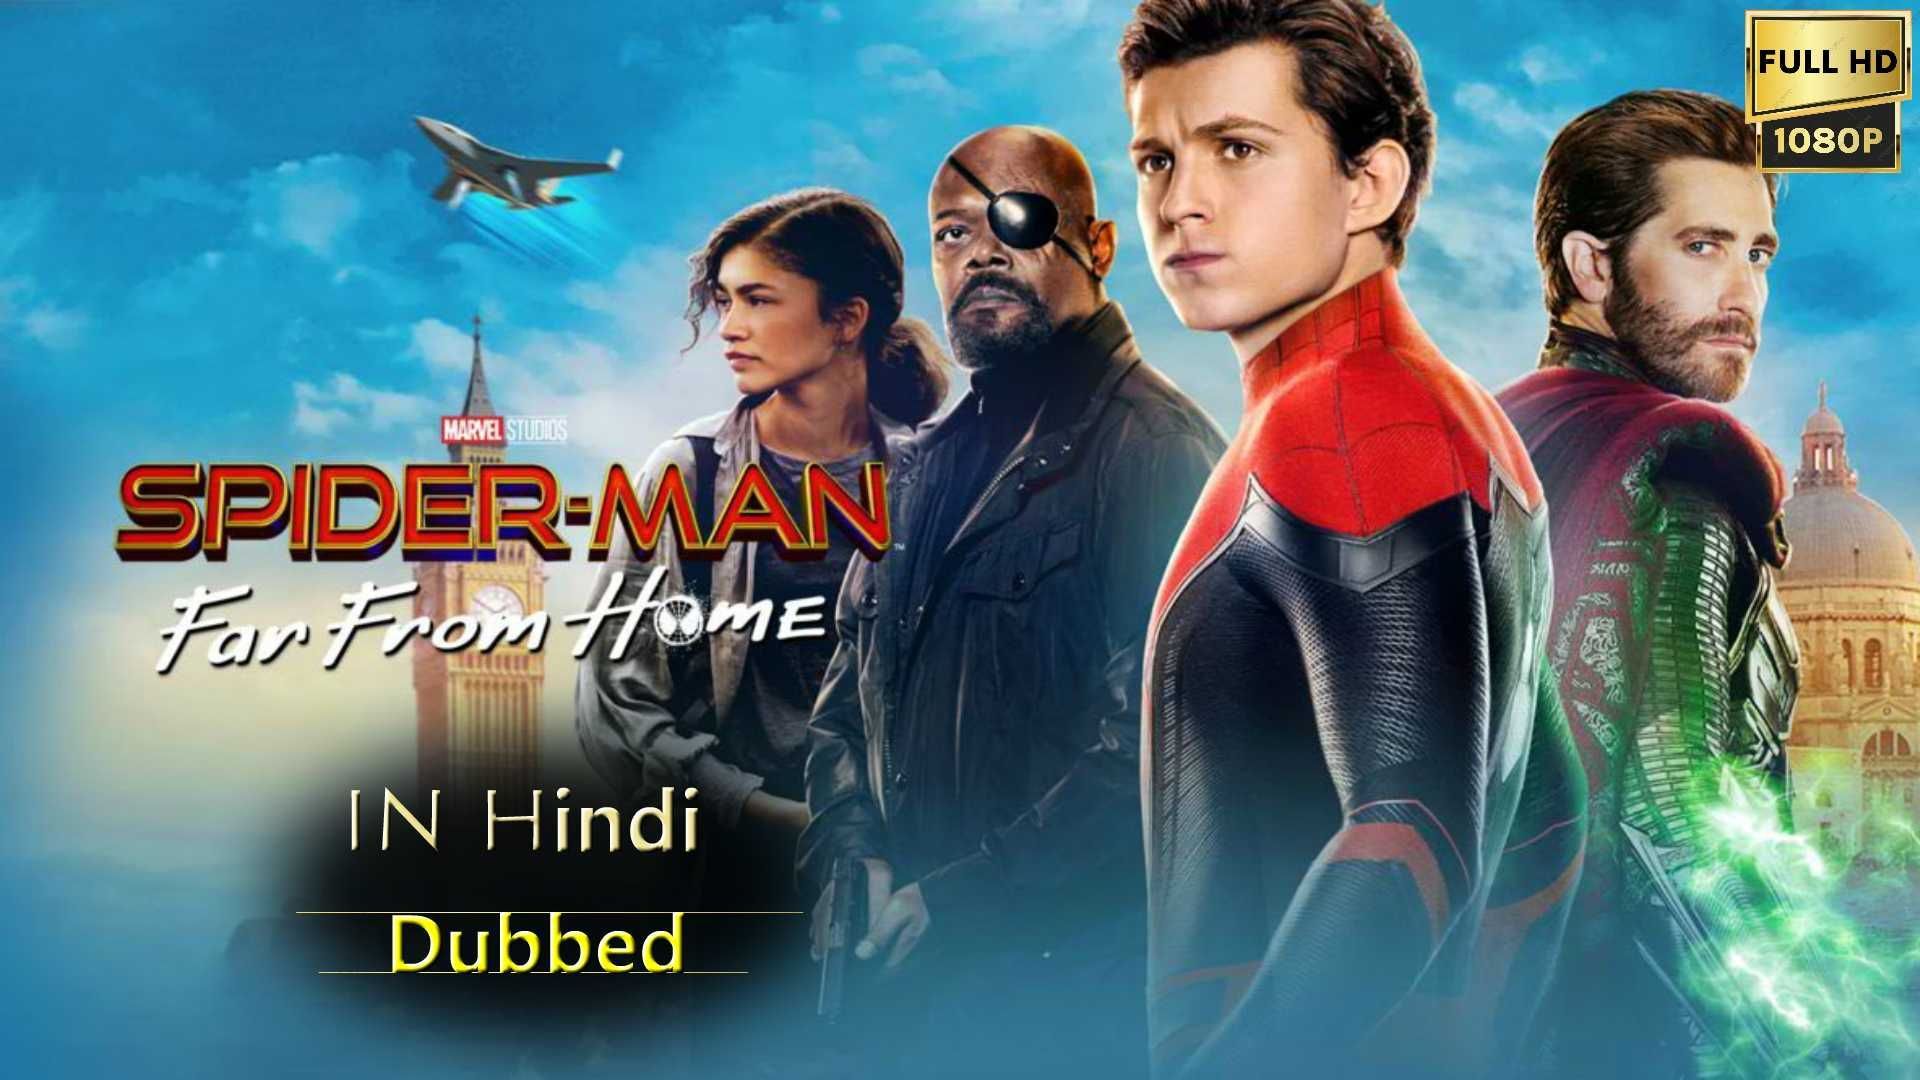 Spider Man Far from Home 2019 Hindi Dubbed - Bilibili